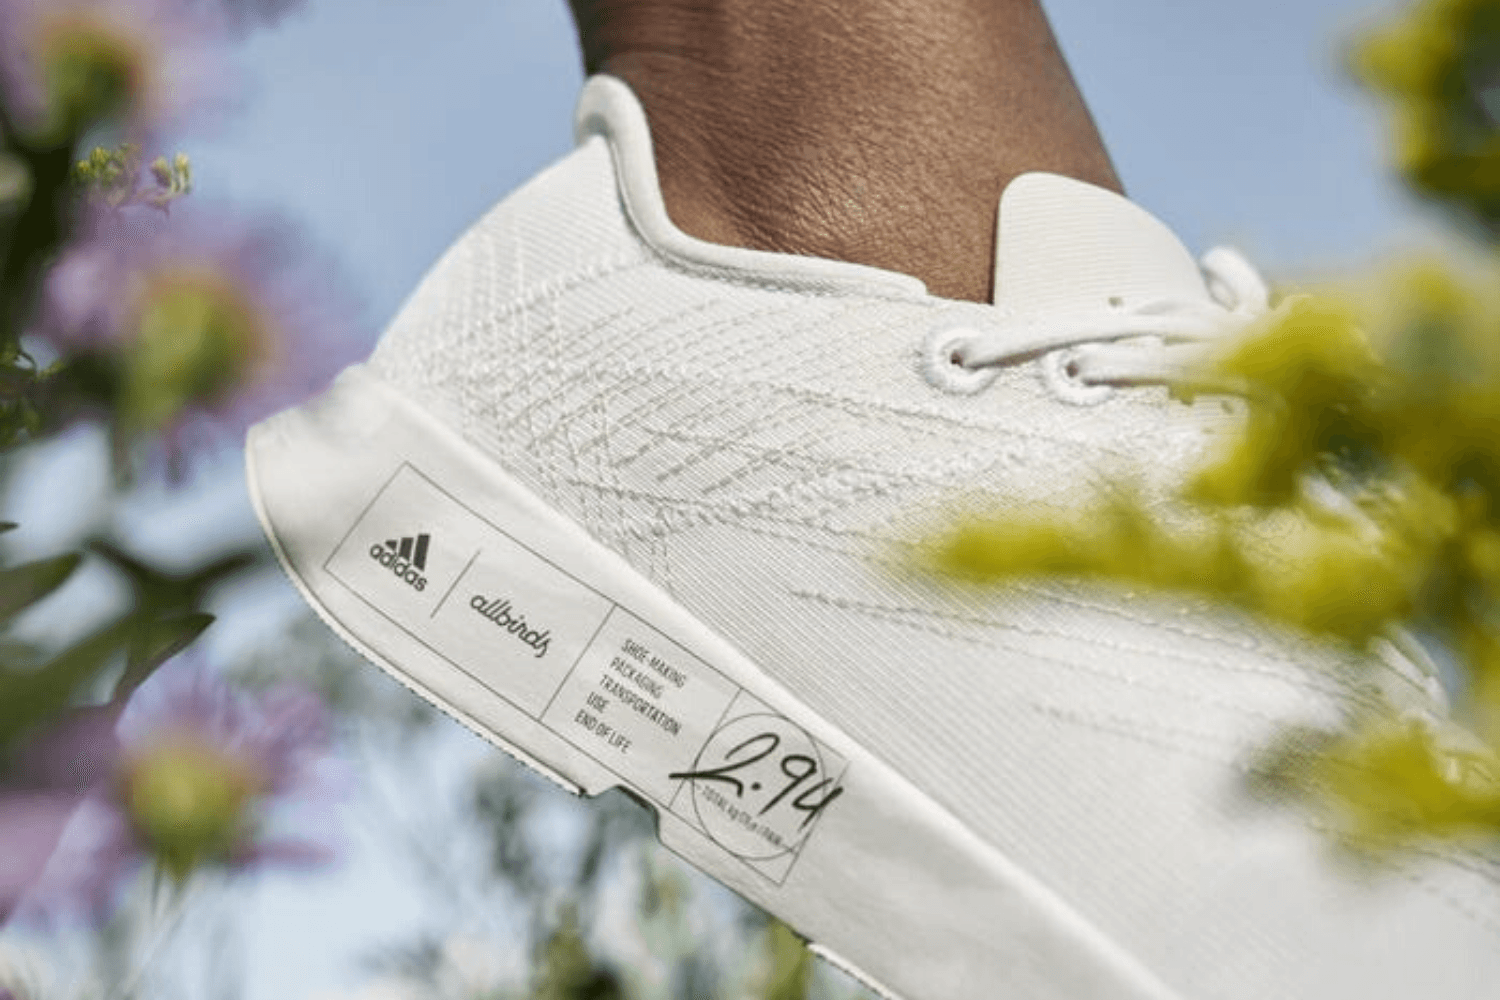 The sustainable adidas x Allbirds Futurecraft Footprint